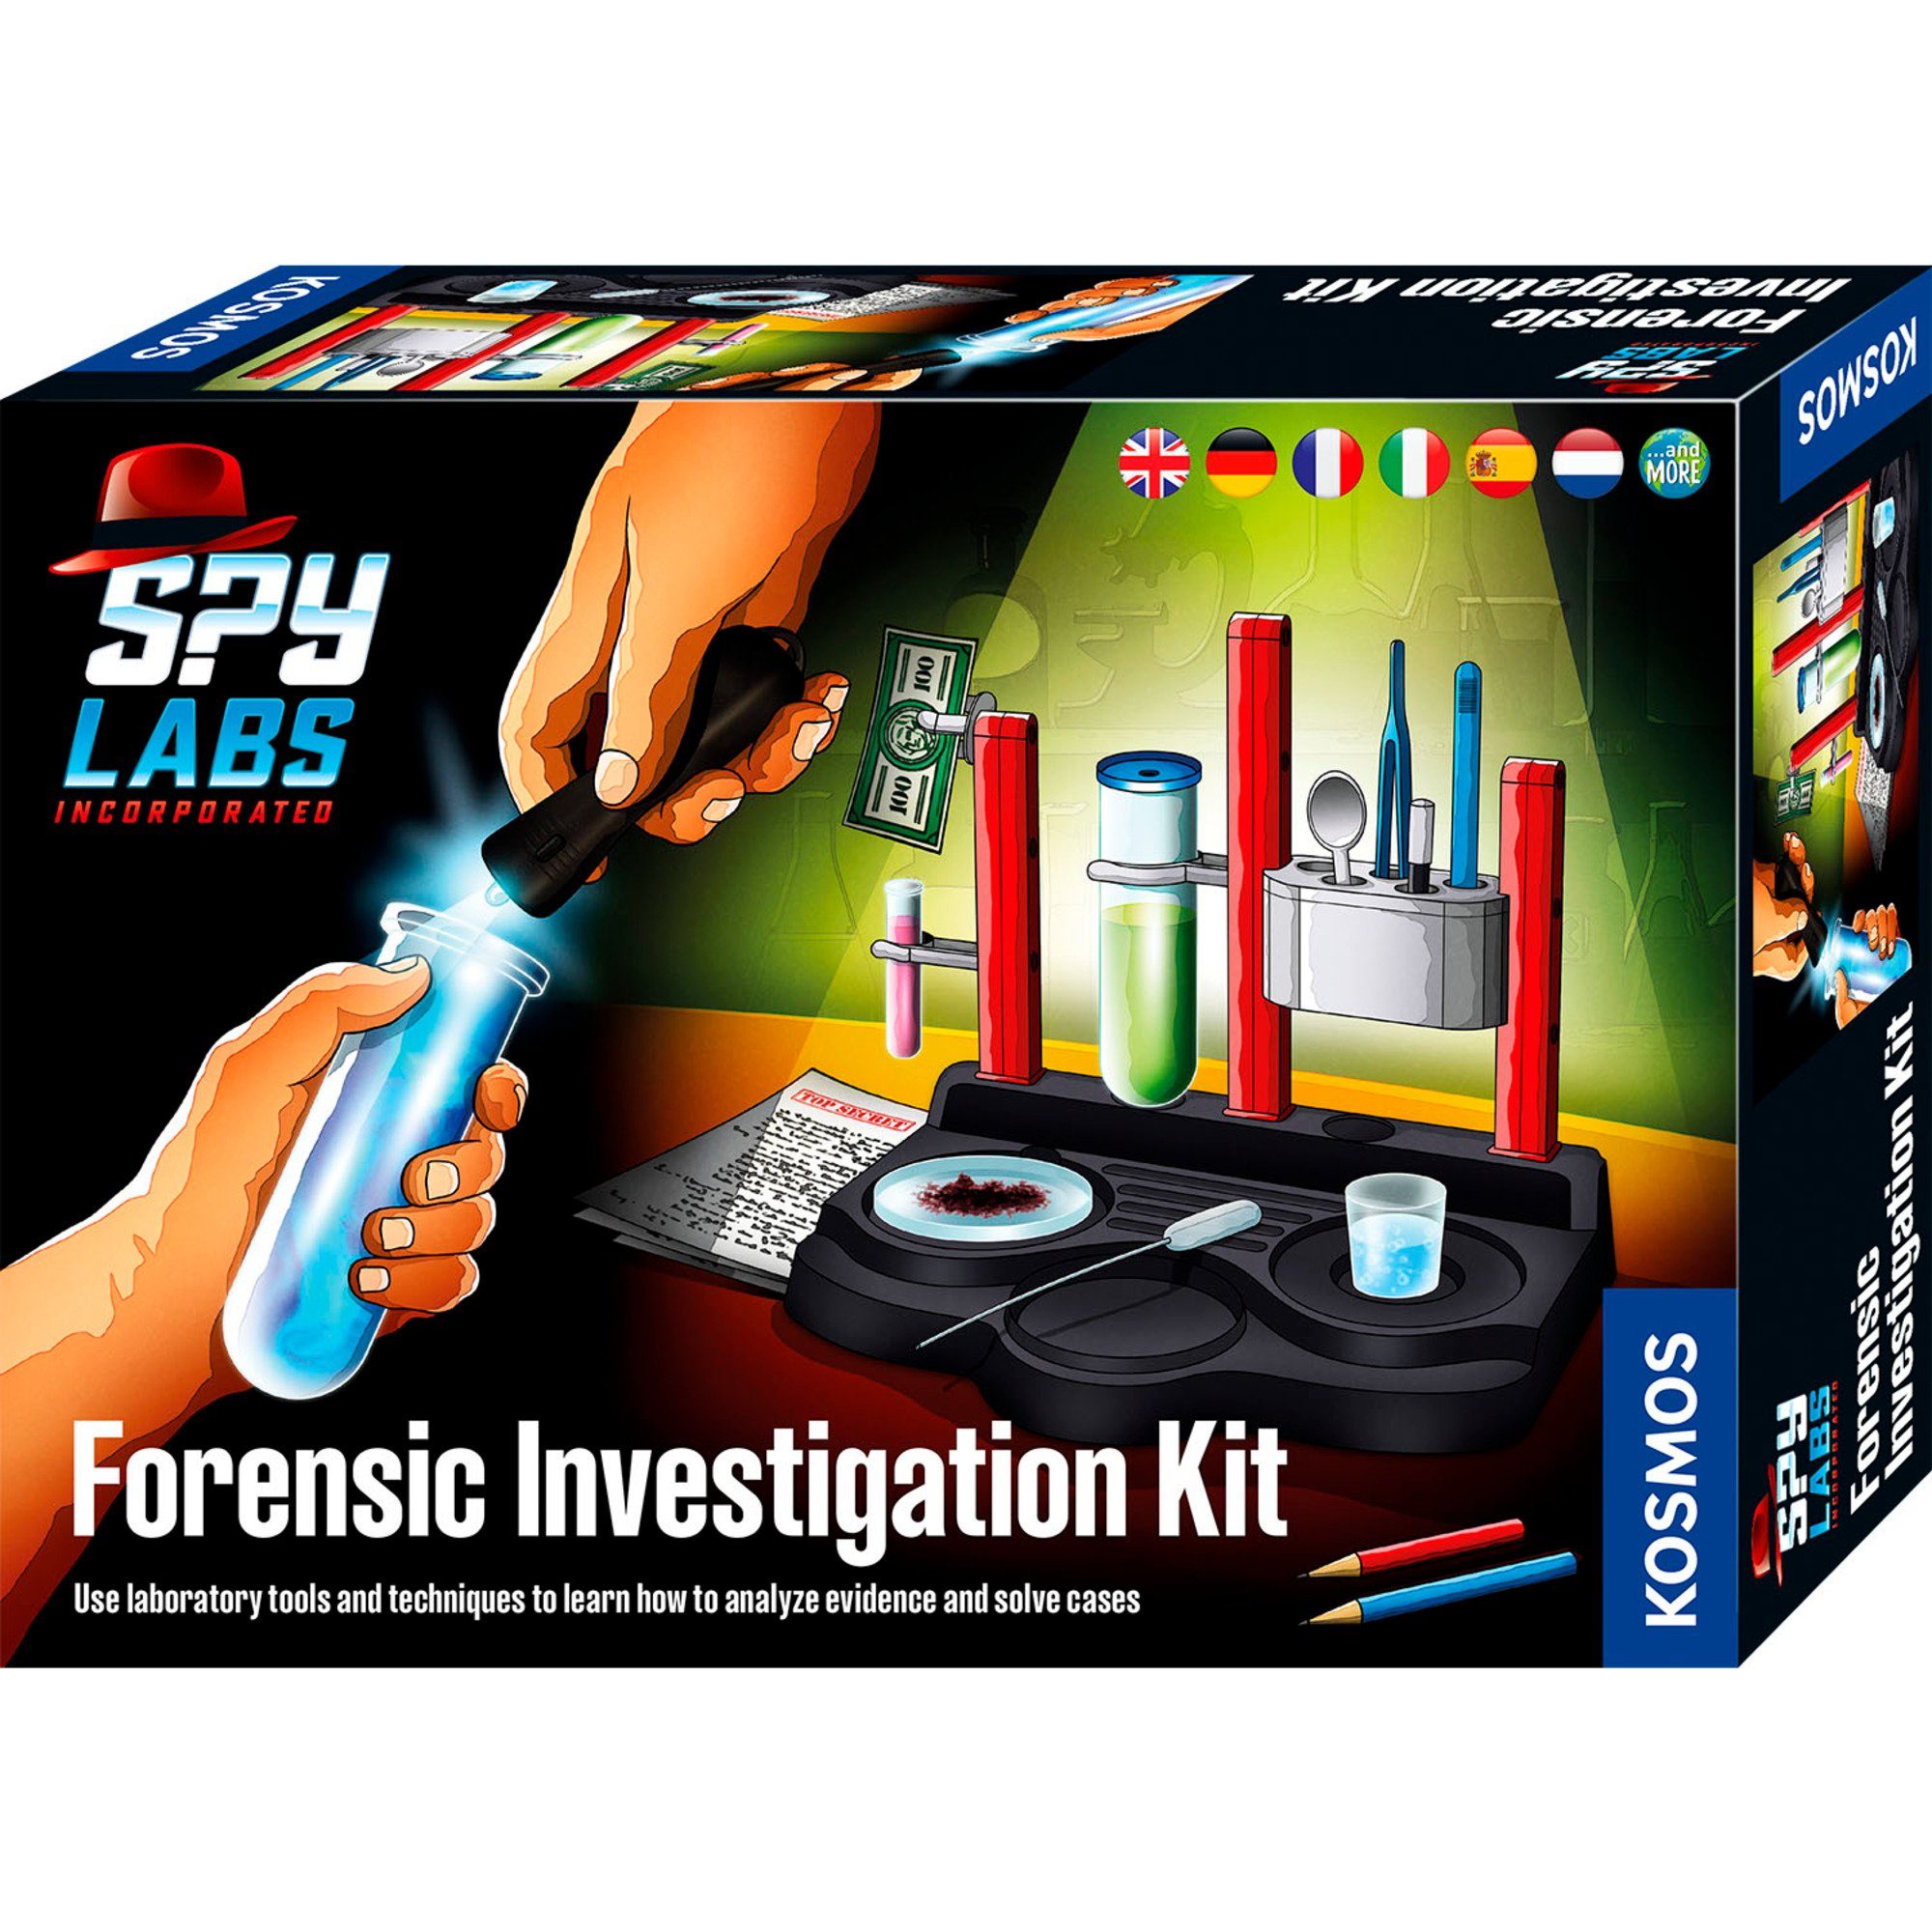 Kosmos Experimentierkasten Spy Labs Incorporated Forensic Investigation Kit